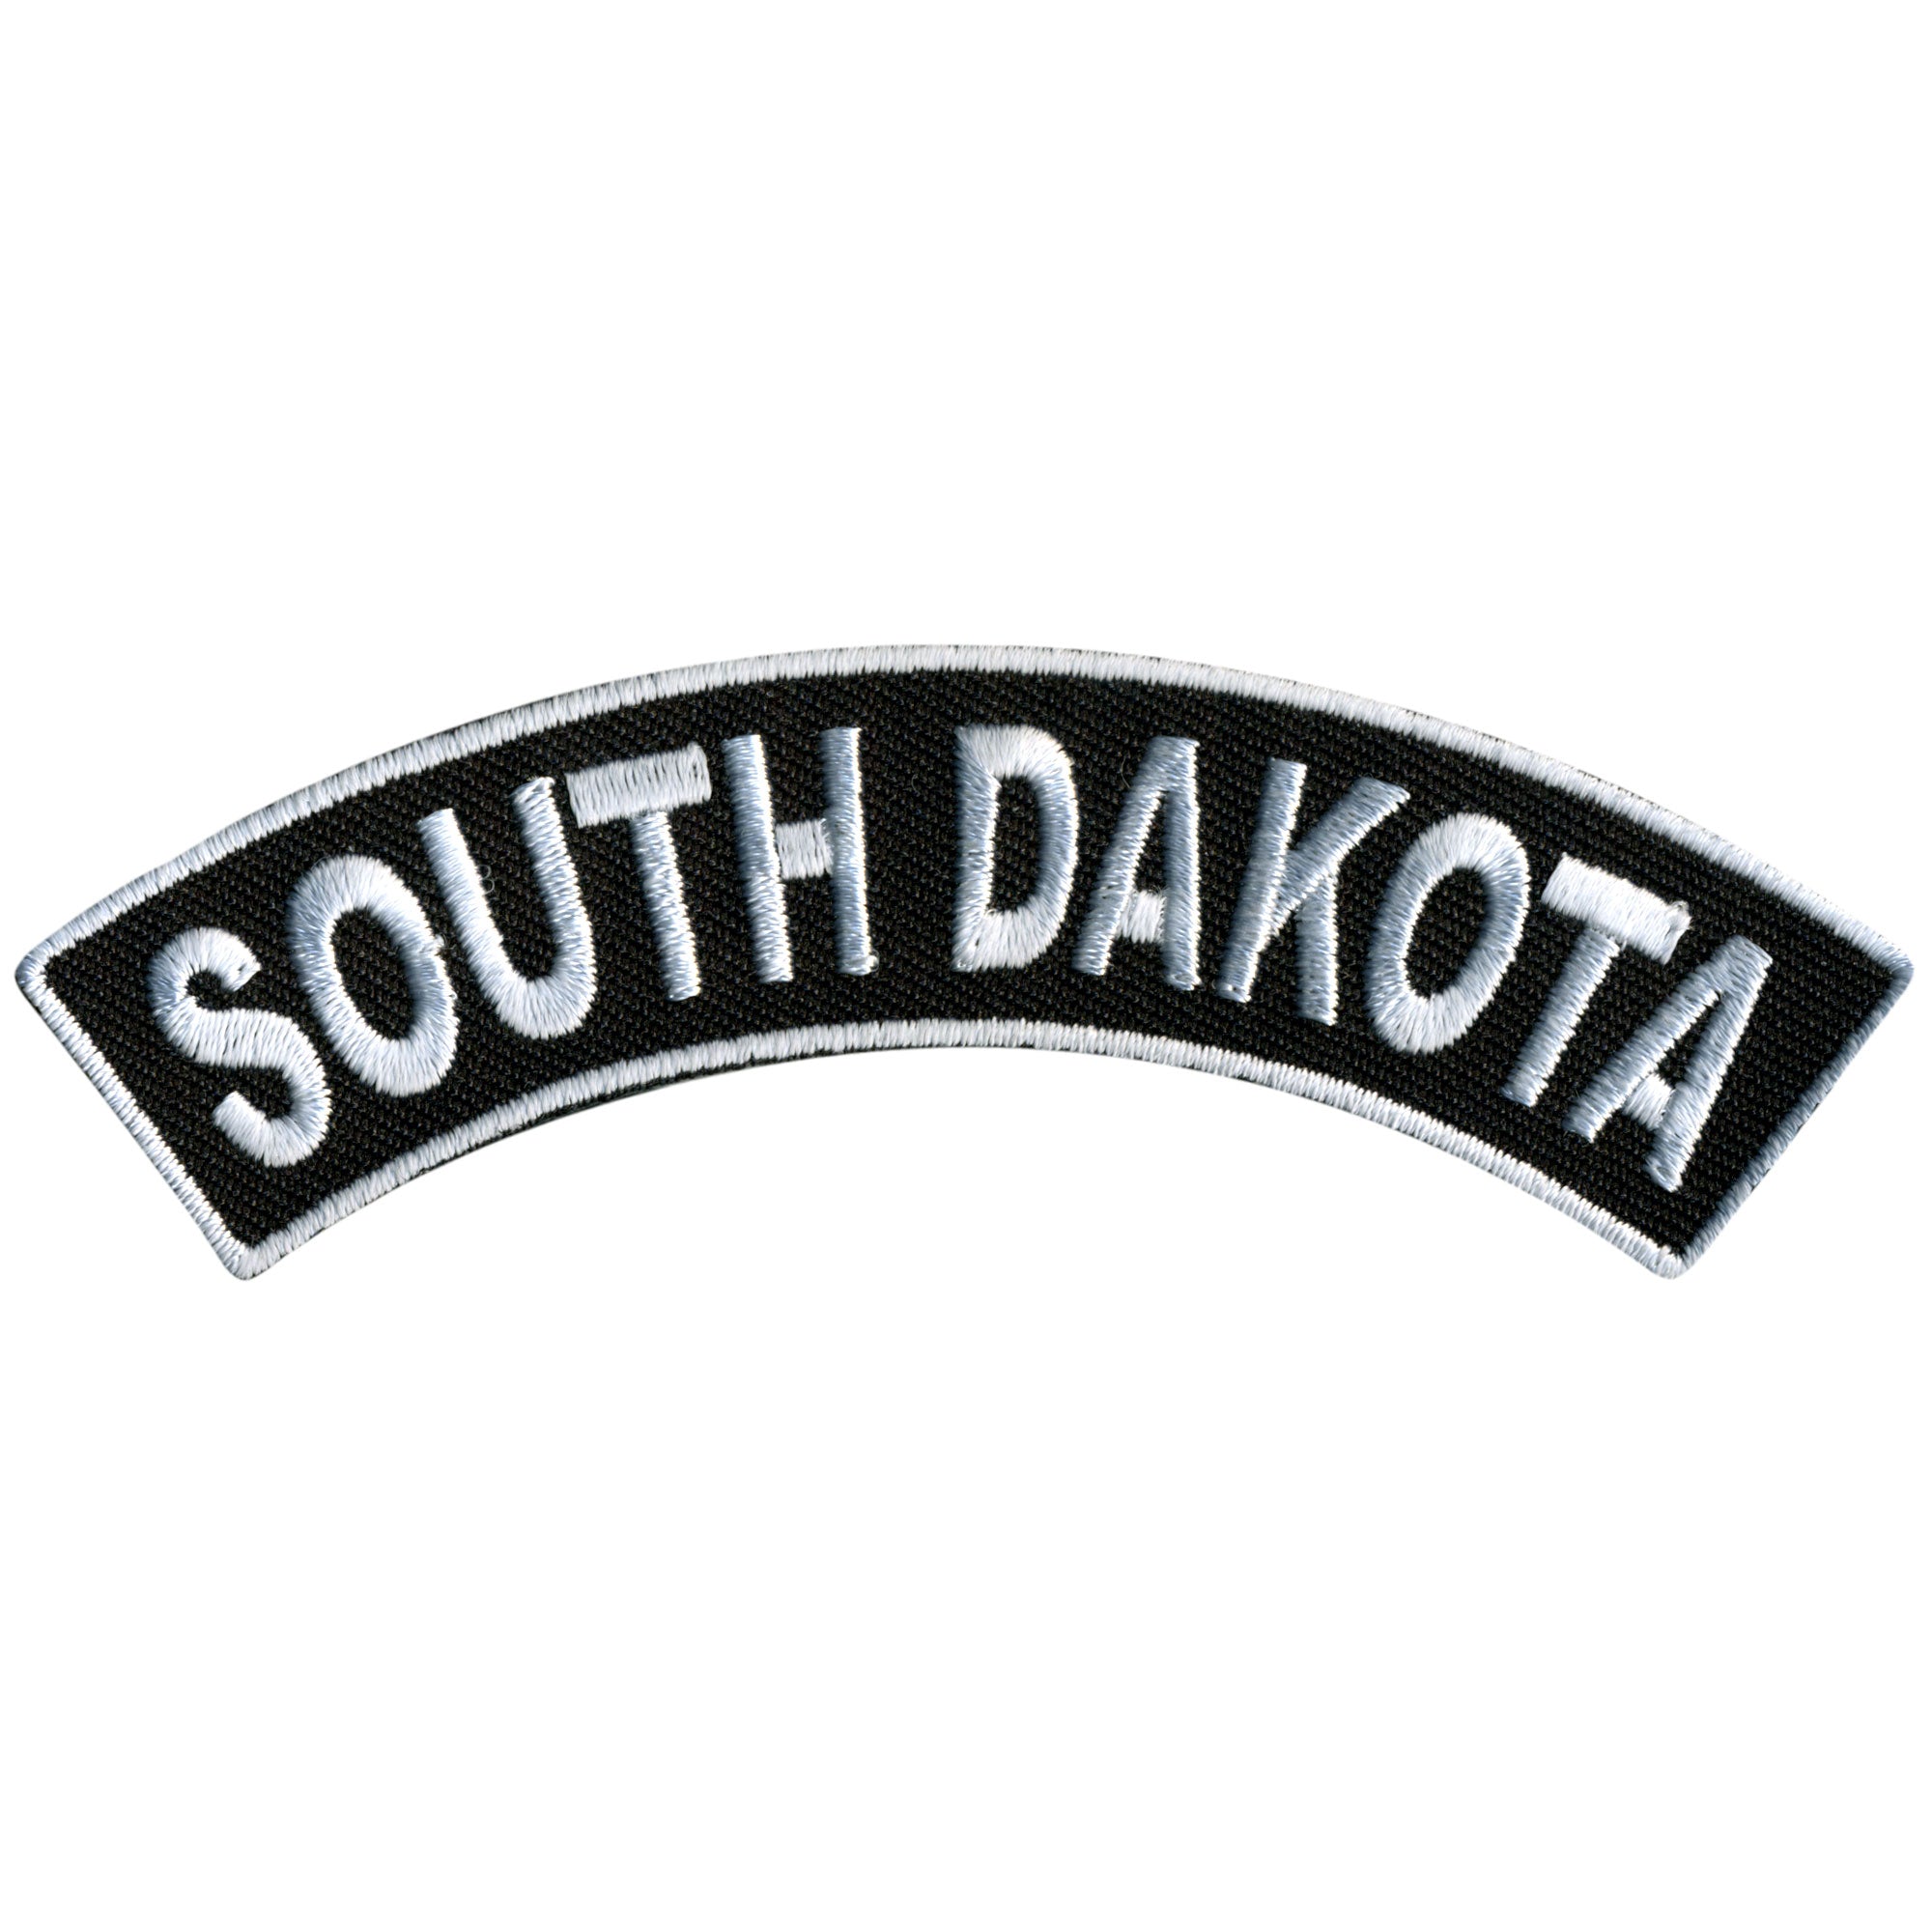 Hot Leathers South Dakota 4” X 1” Top Rocker Patch